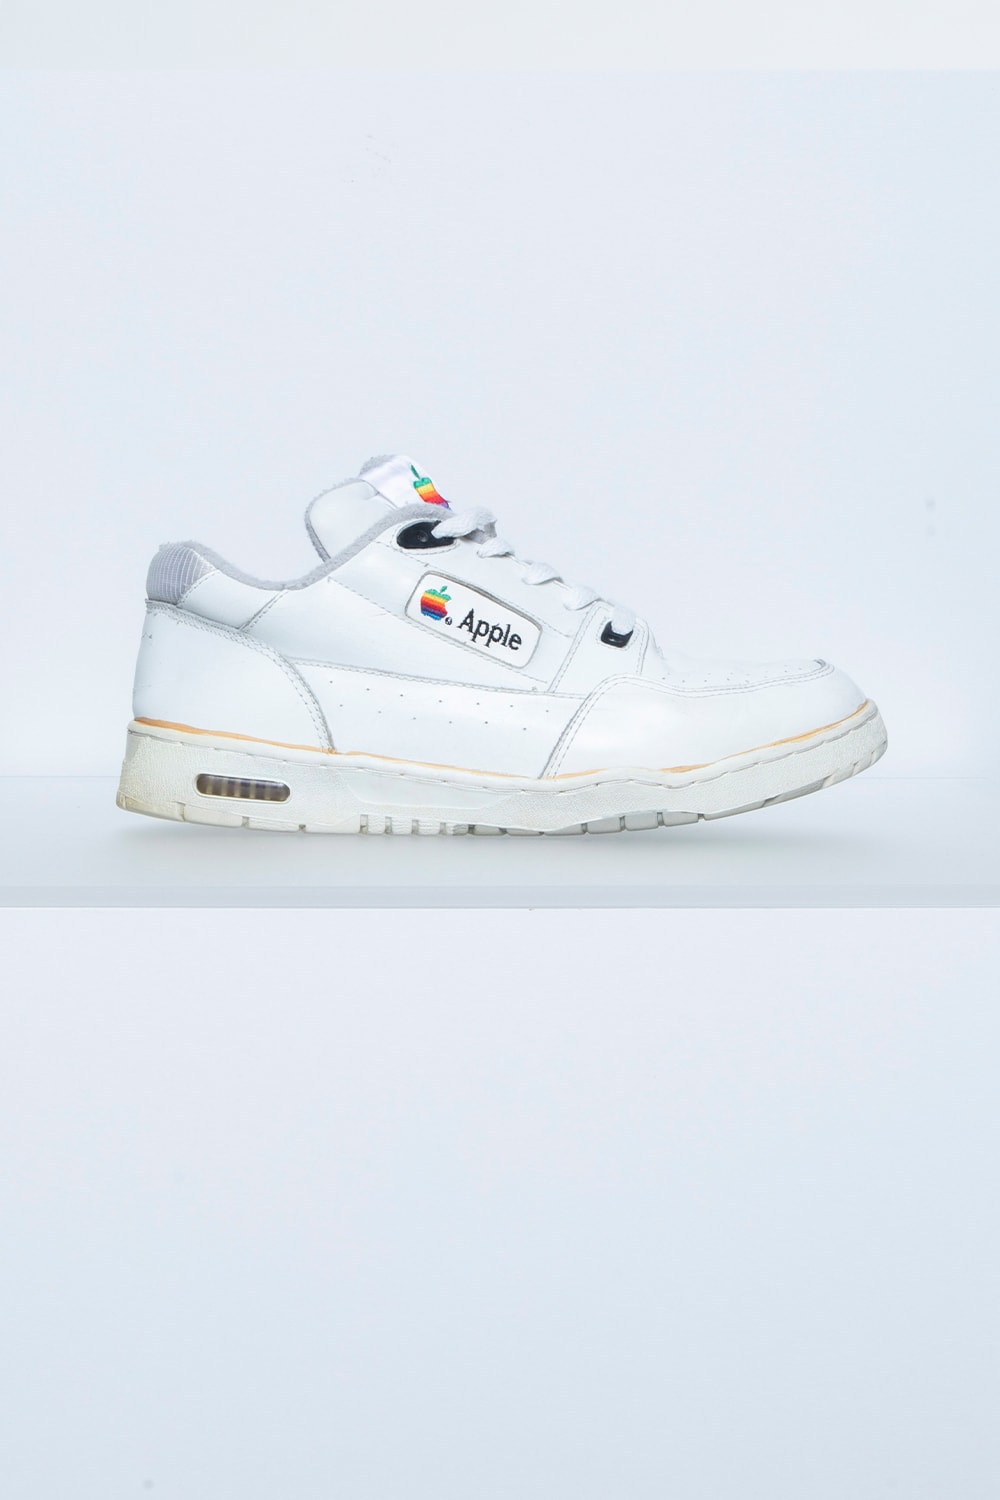 $50,000 Apple Sneakers Steve Jobs Tim Cook RARE Very Rare Personal Pair '90s Apple Sneaker